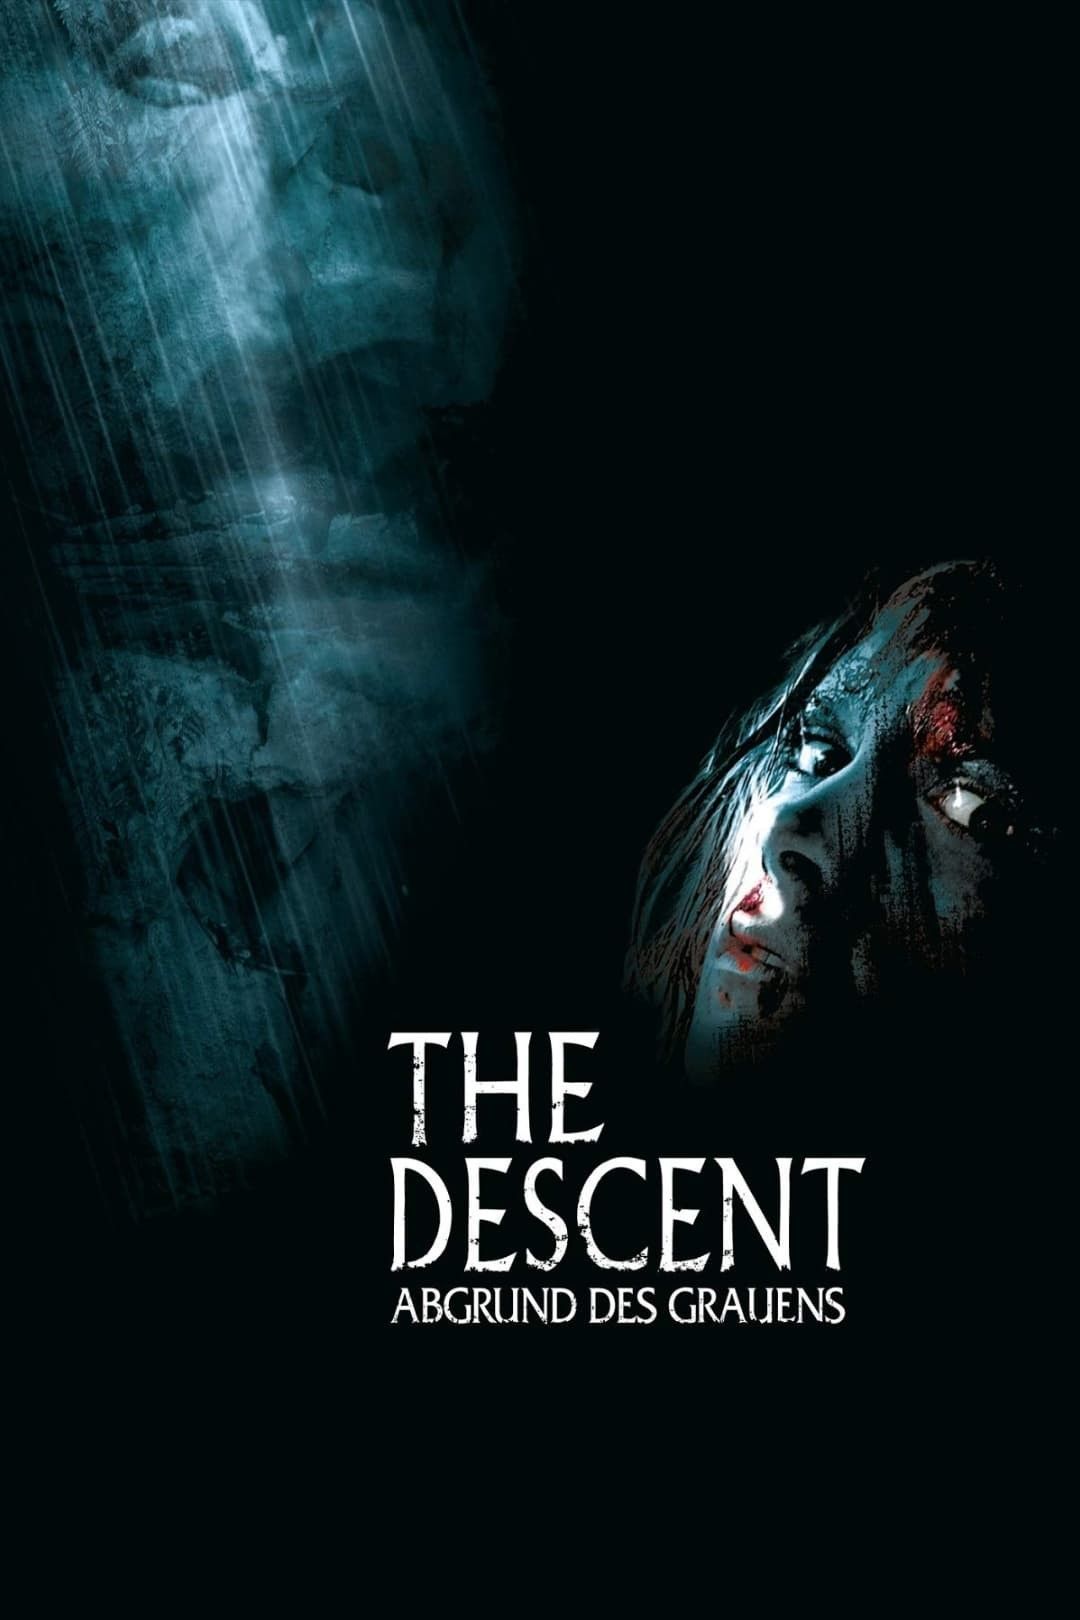 The Descent (2005) Trailer 